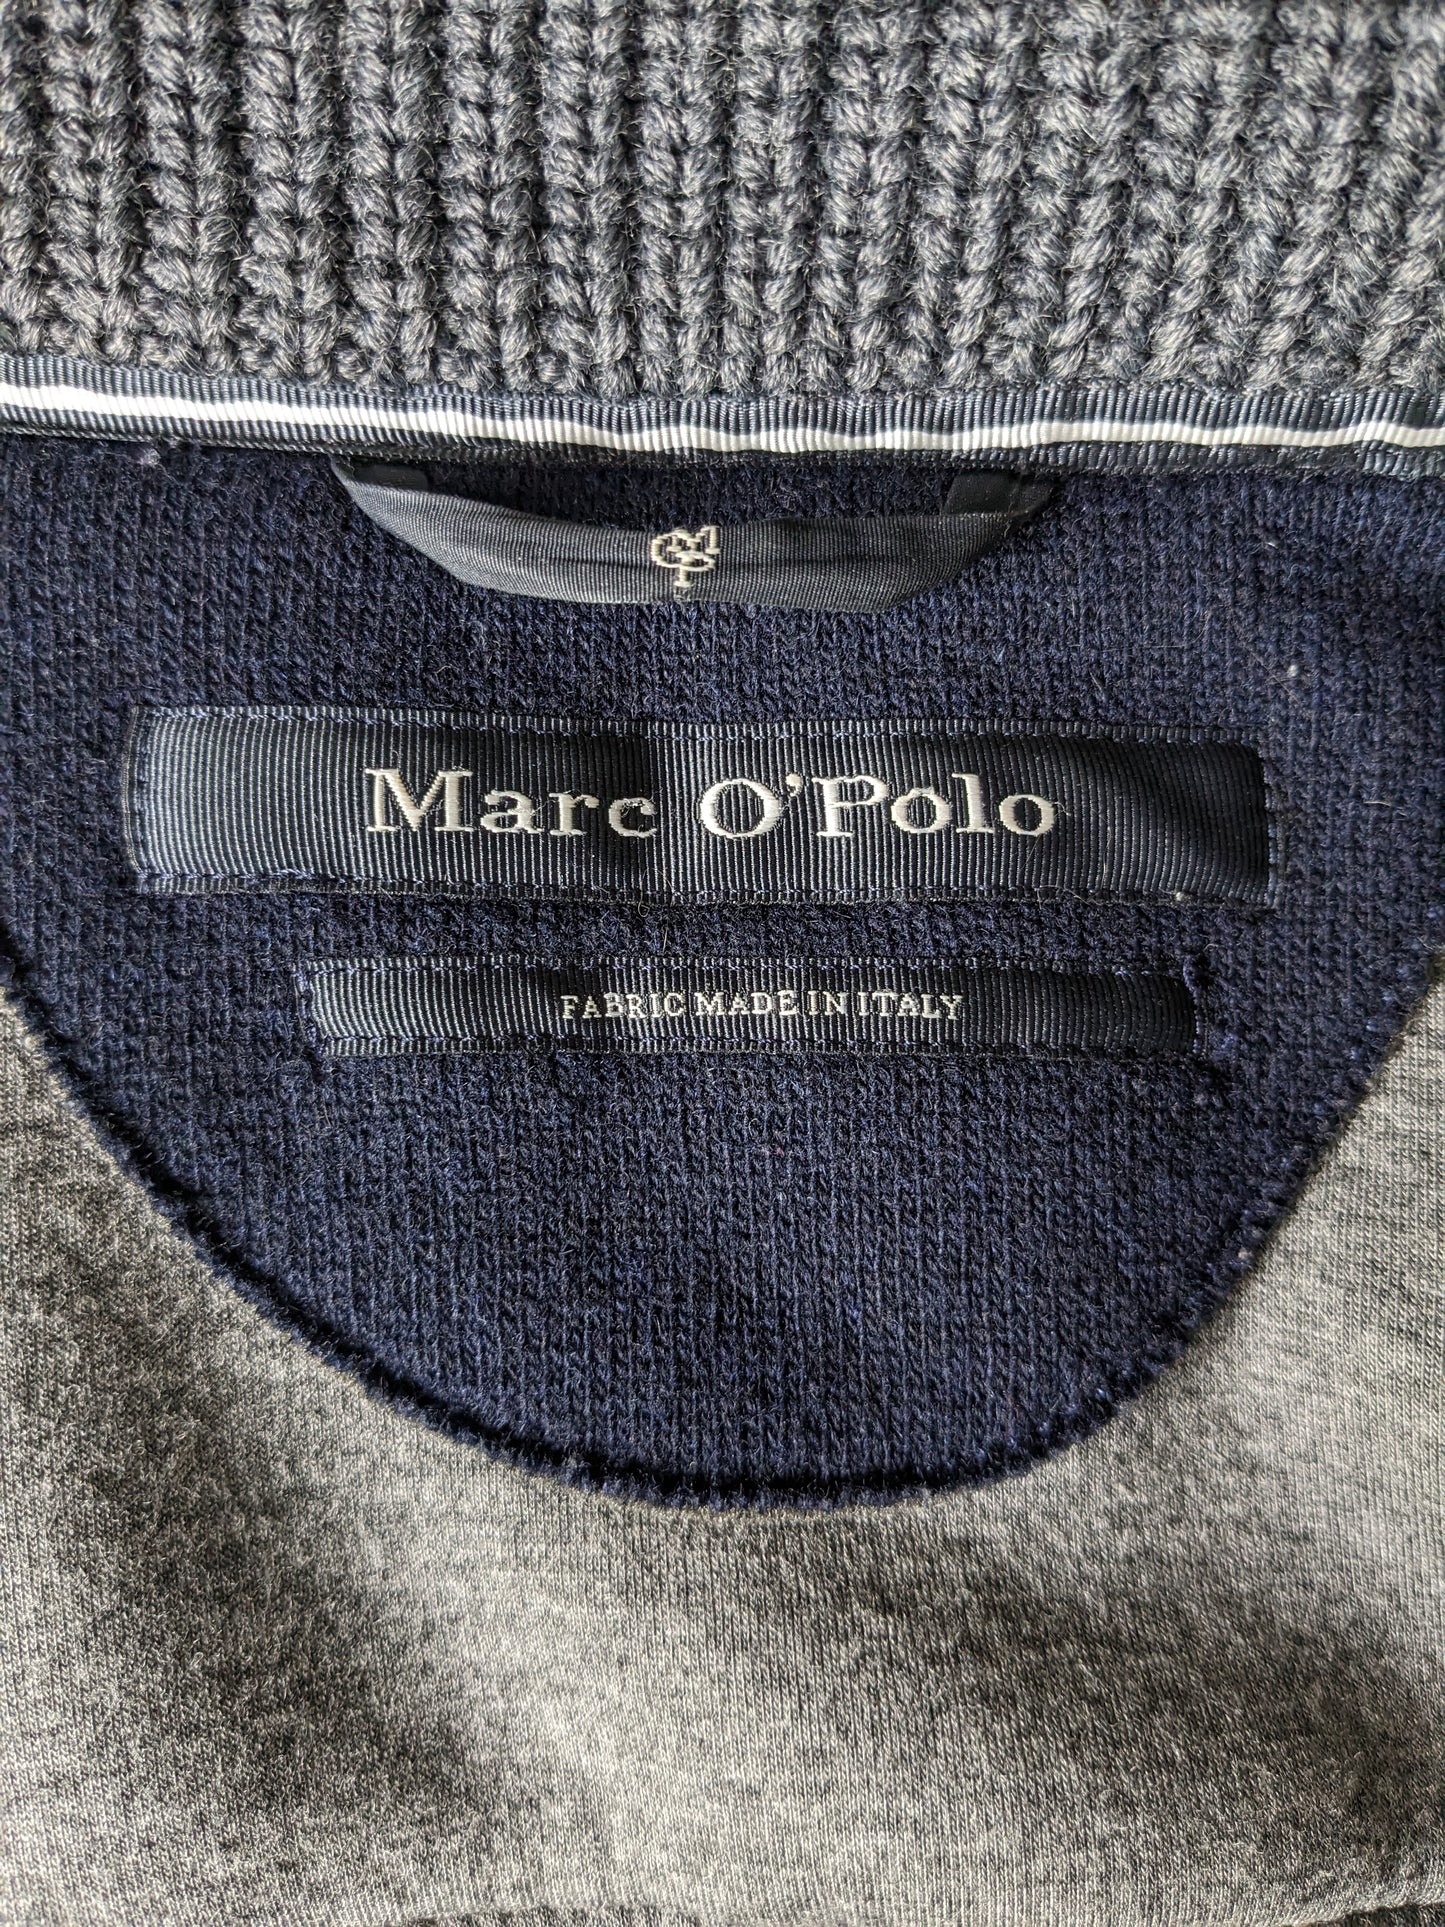 Marc O'Polo wool half -length jacket. Dark blue gray colored. Size M.